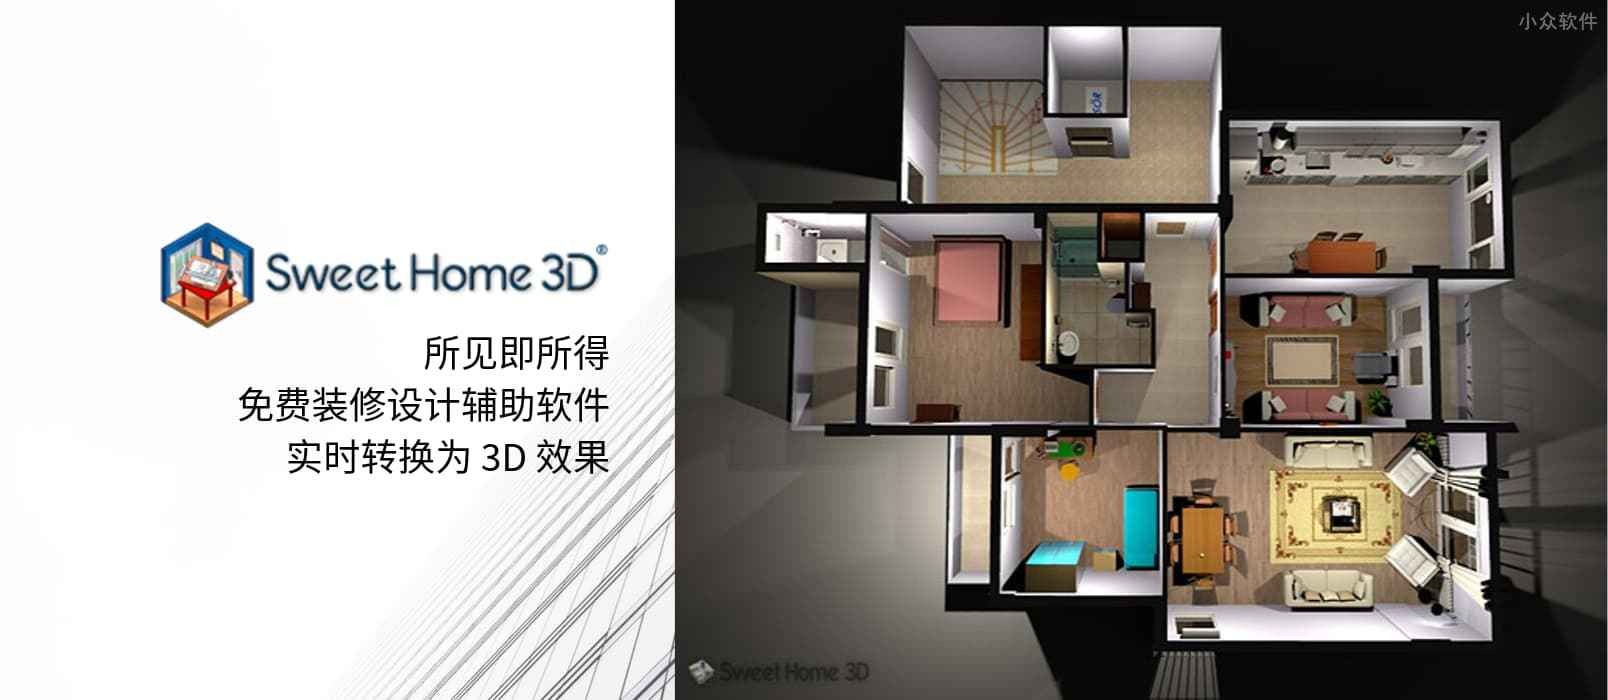 Sweet Home 3D – 拖拽就能创建 3D 效果的装修图，免费开源很好用